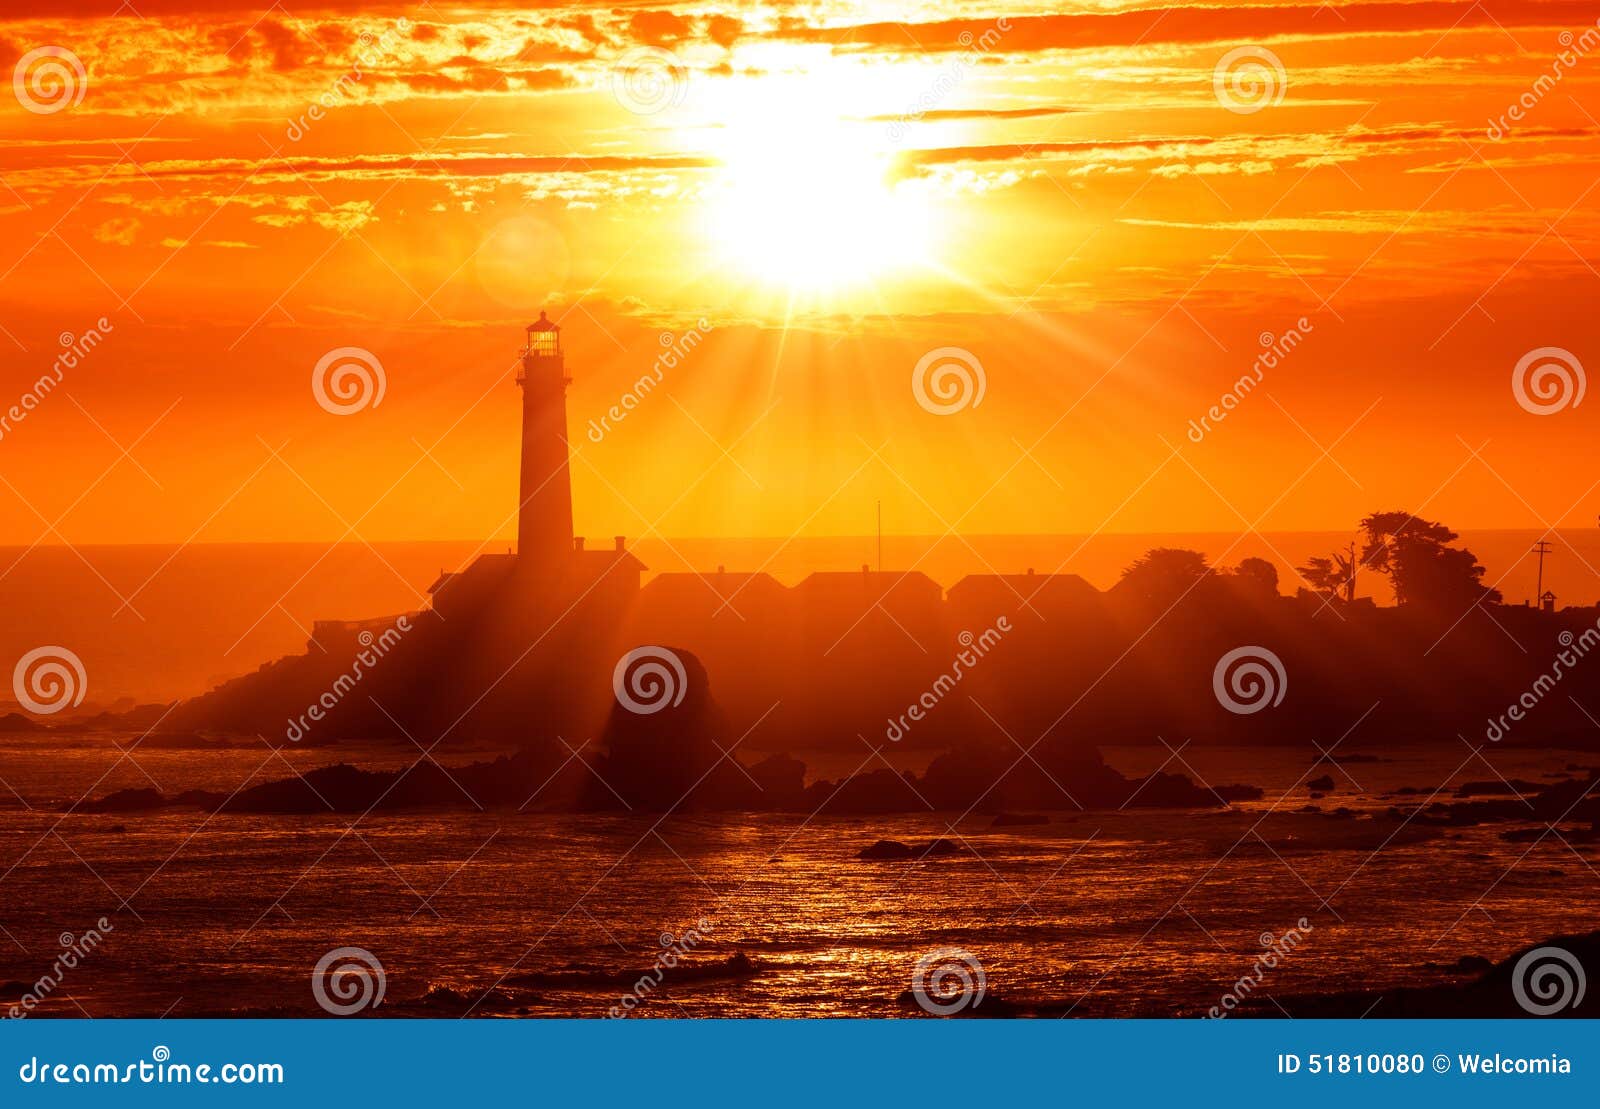 california lighthouse sunset